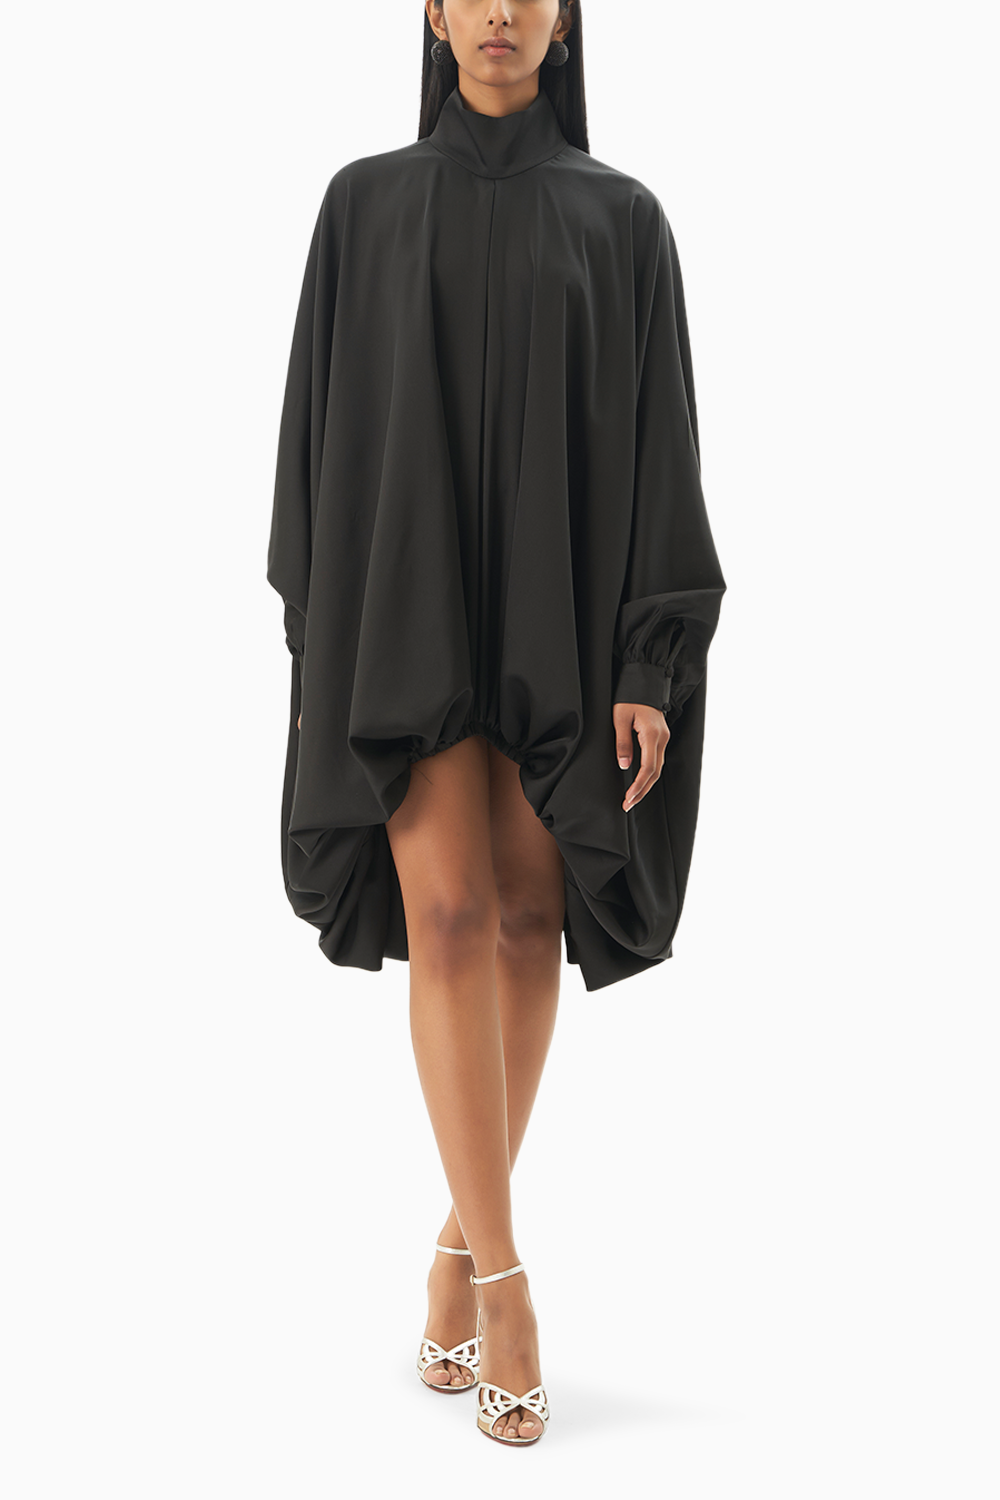 Black Modish Neckline Dress